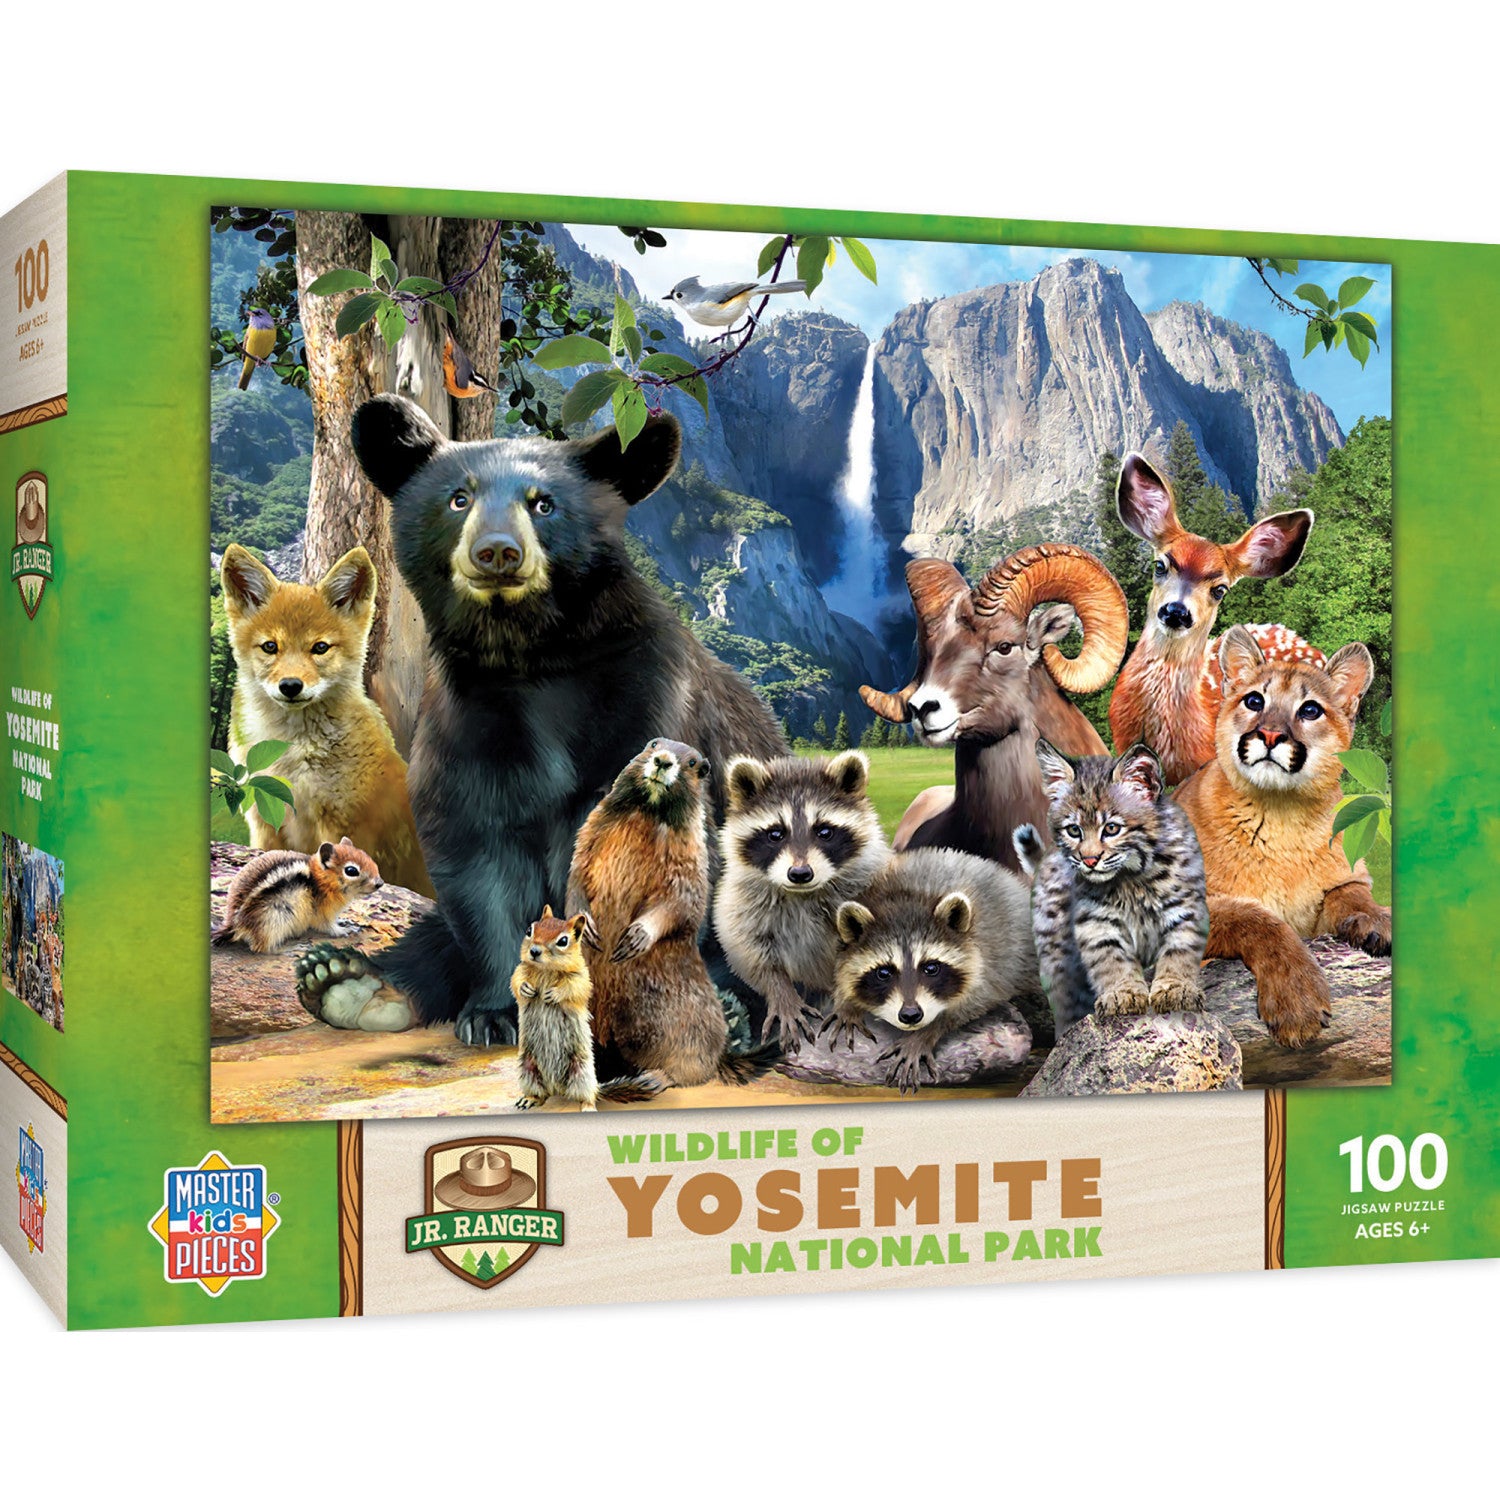 Wildlife of Yosemite National Park - 100 Piece Jigsaw Puzzle